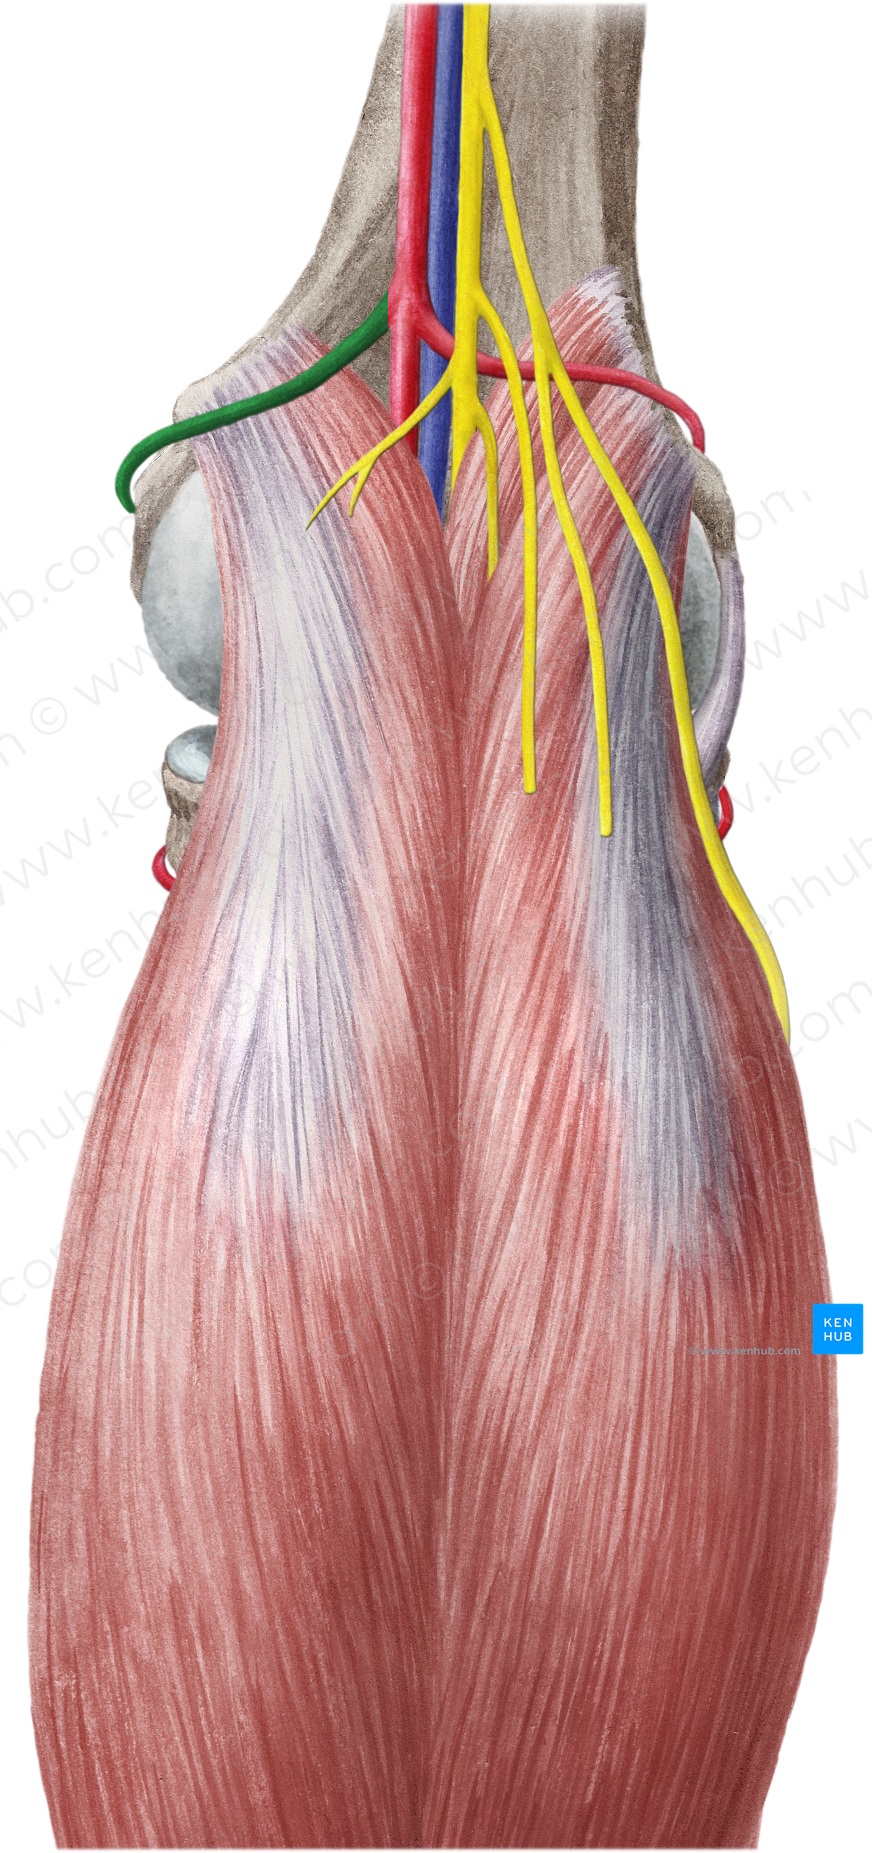 Superior medial genicular artery (#1856)